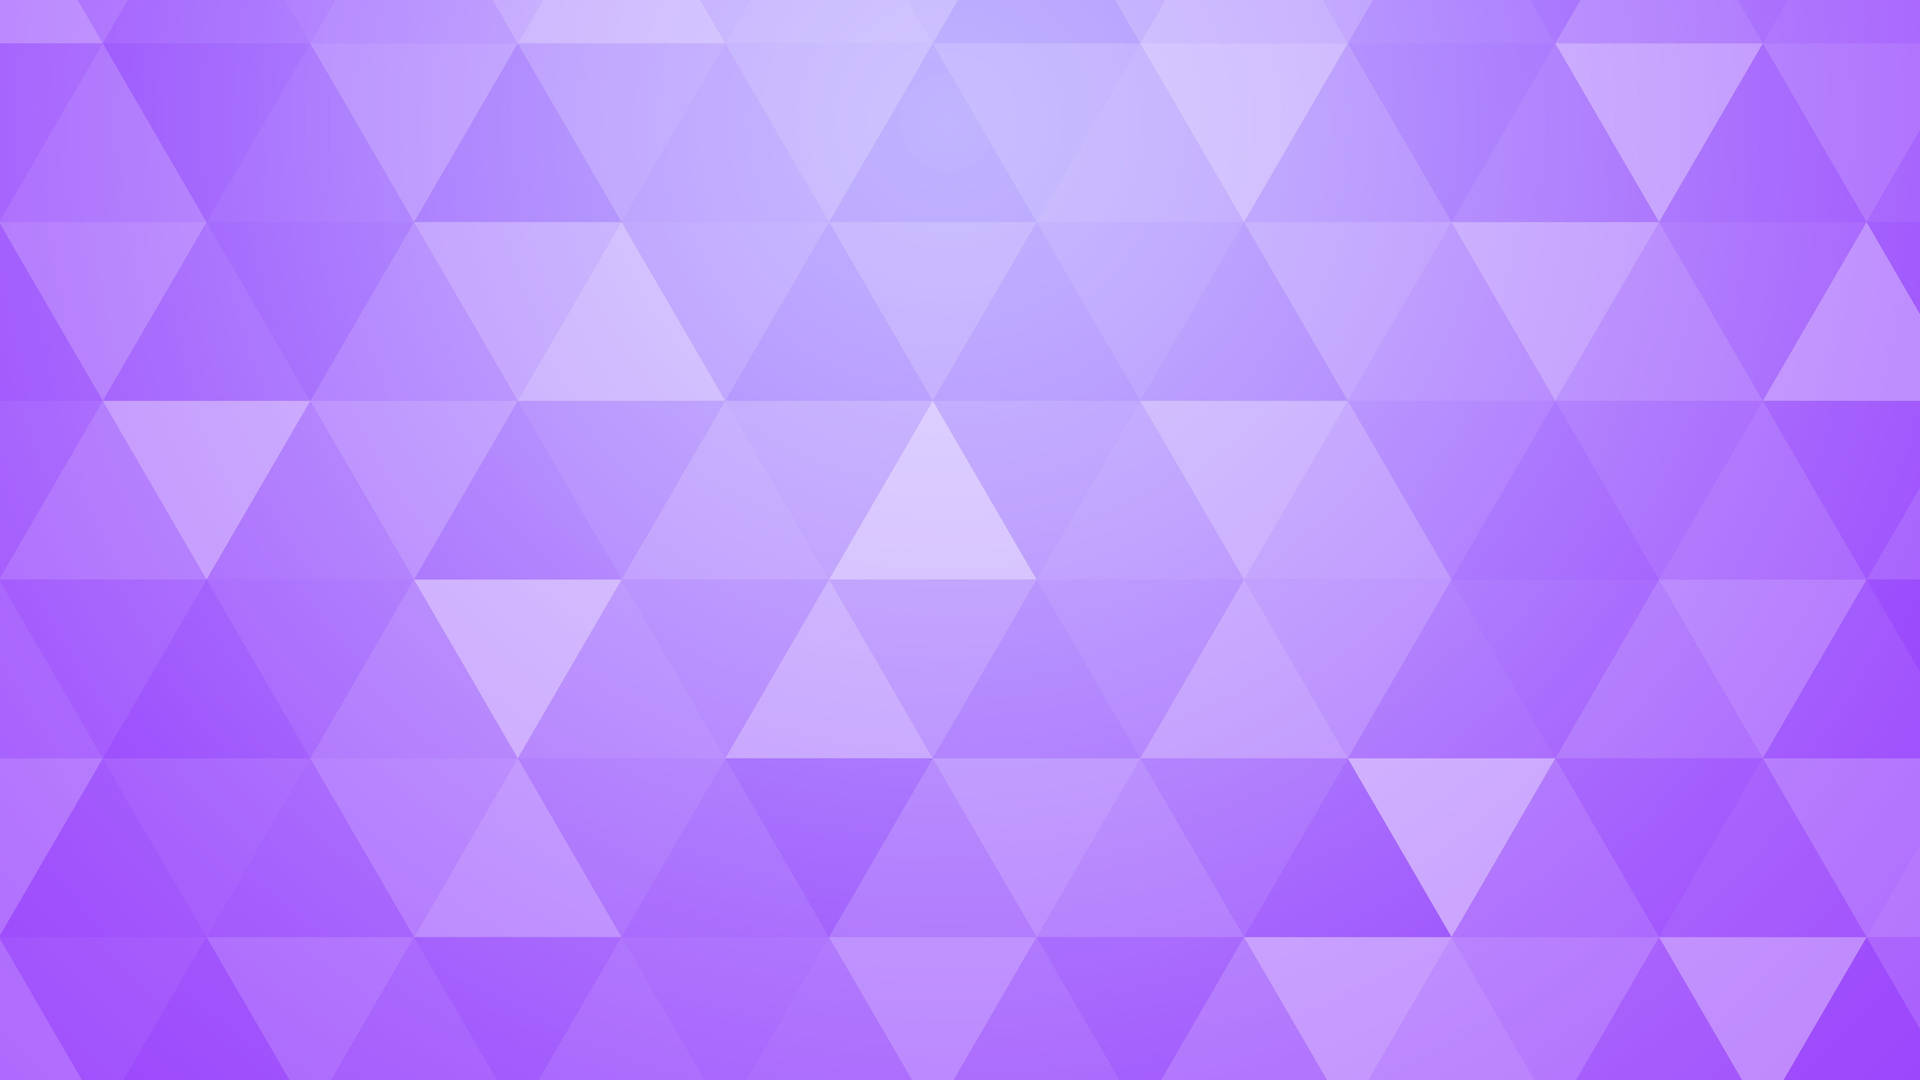 Violet Aesthetic Triangular Geometric Shapes Wallpaper